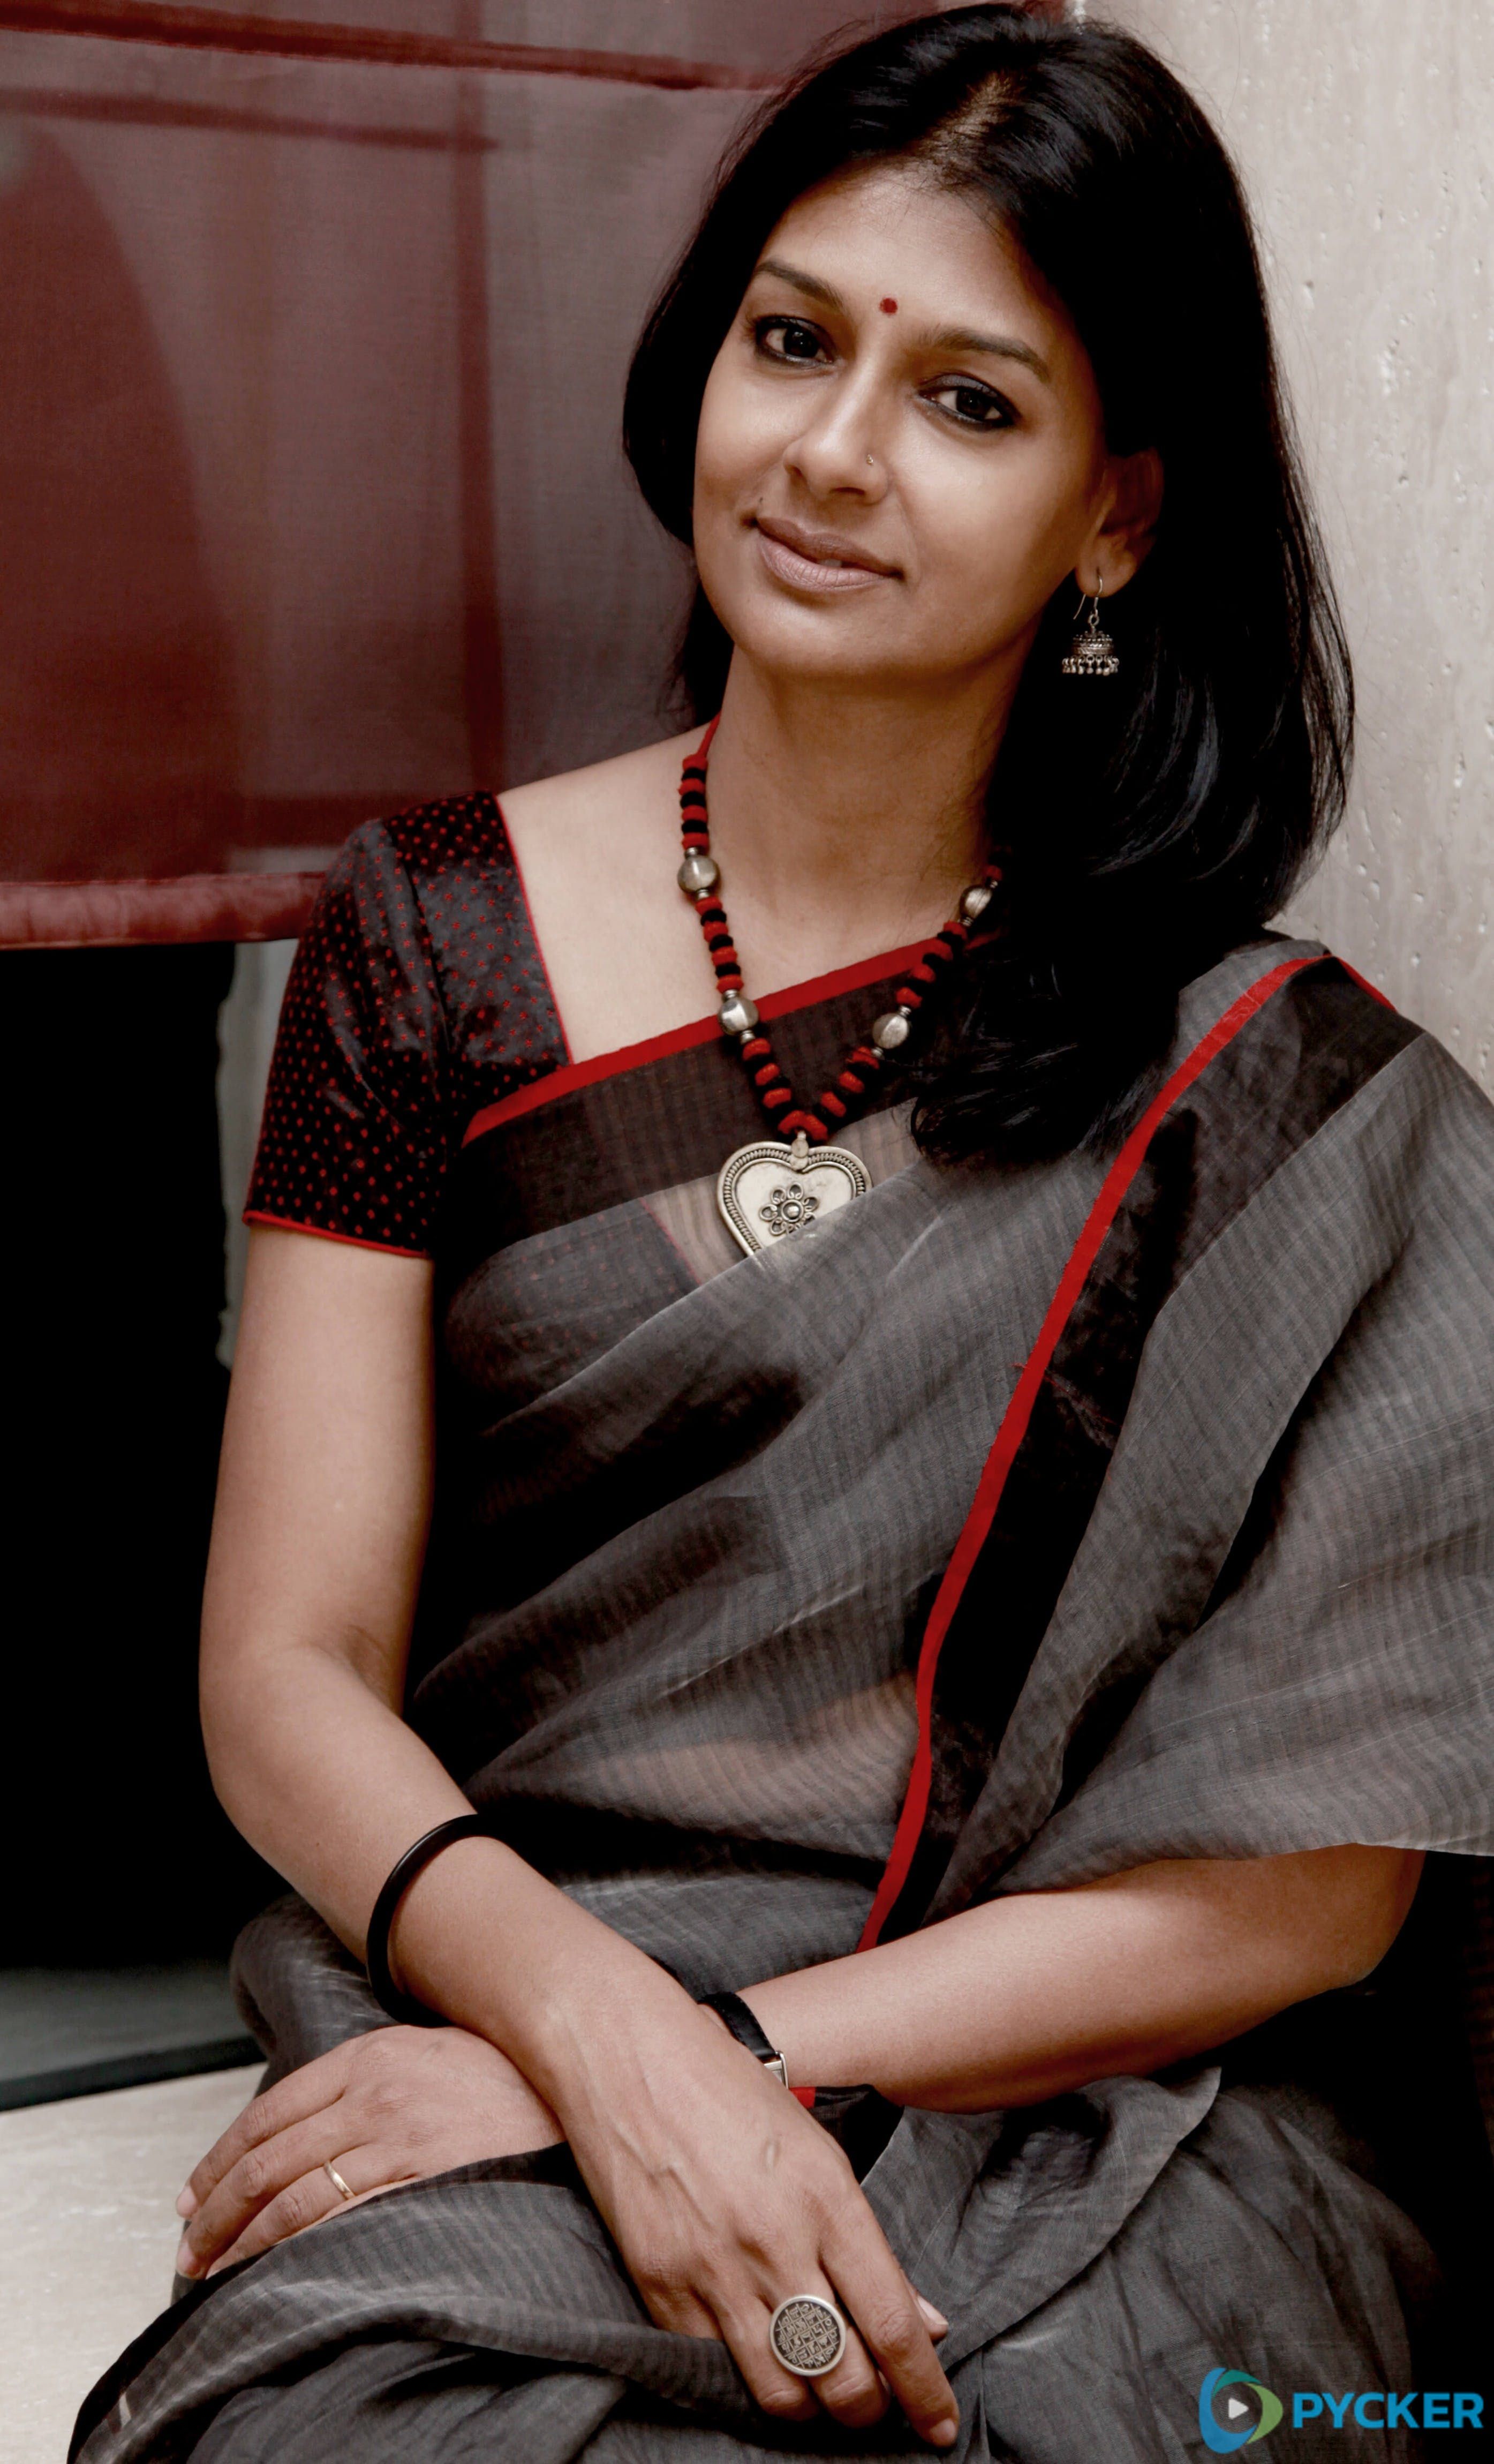 Most beautiful Indian Women On Earth. Nandita